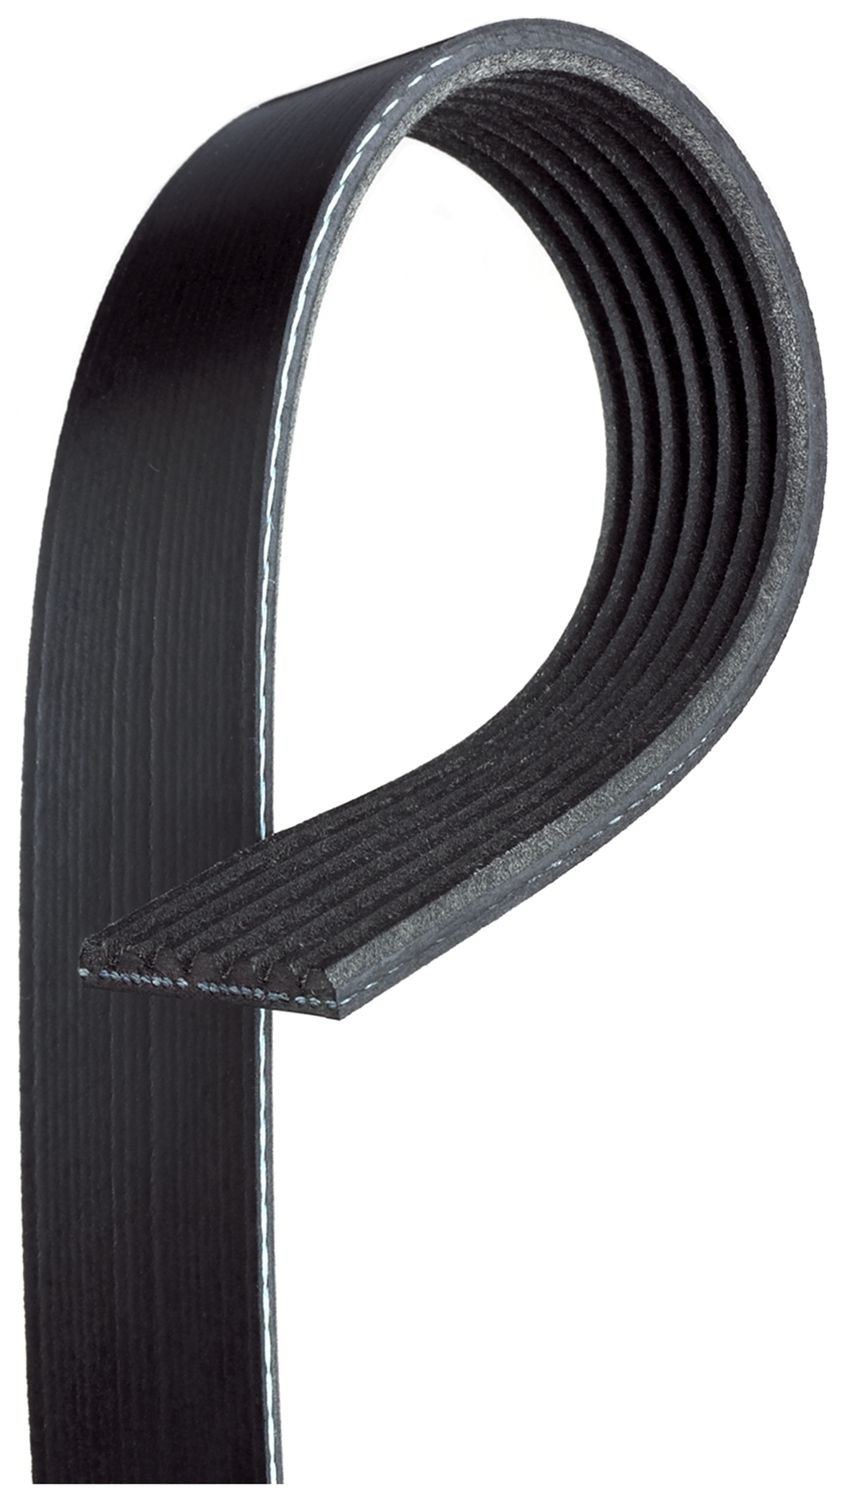 GATES 7PK1915 Serpentine belt 1915mm, 7, G-Force™ C12™ CVT Belt